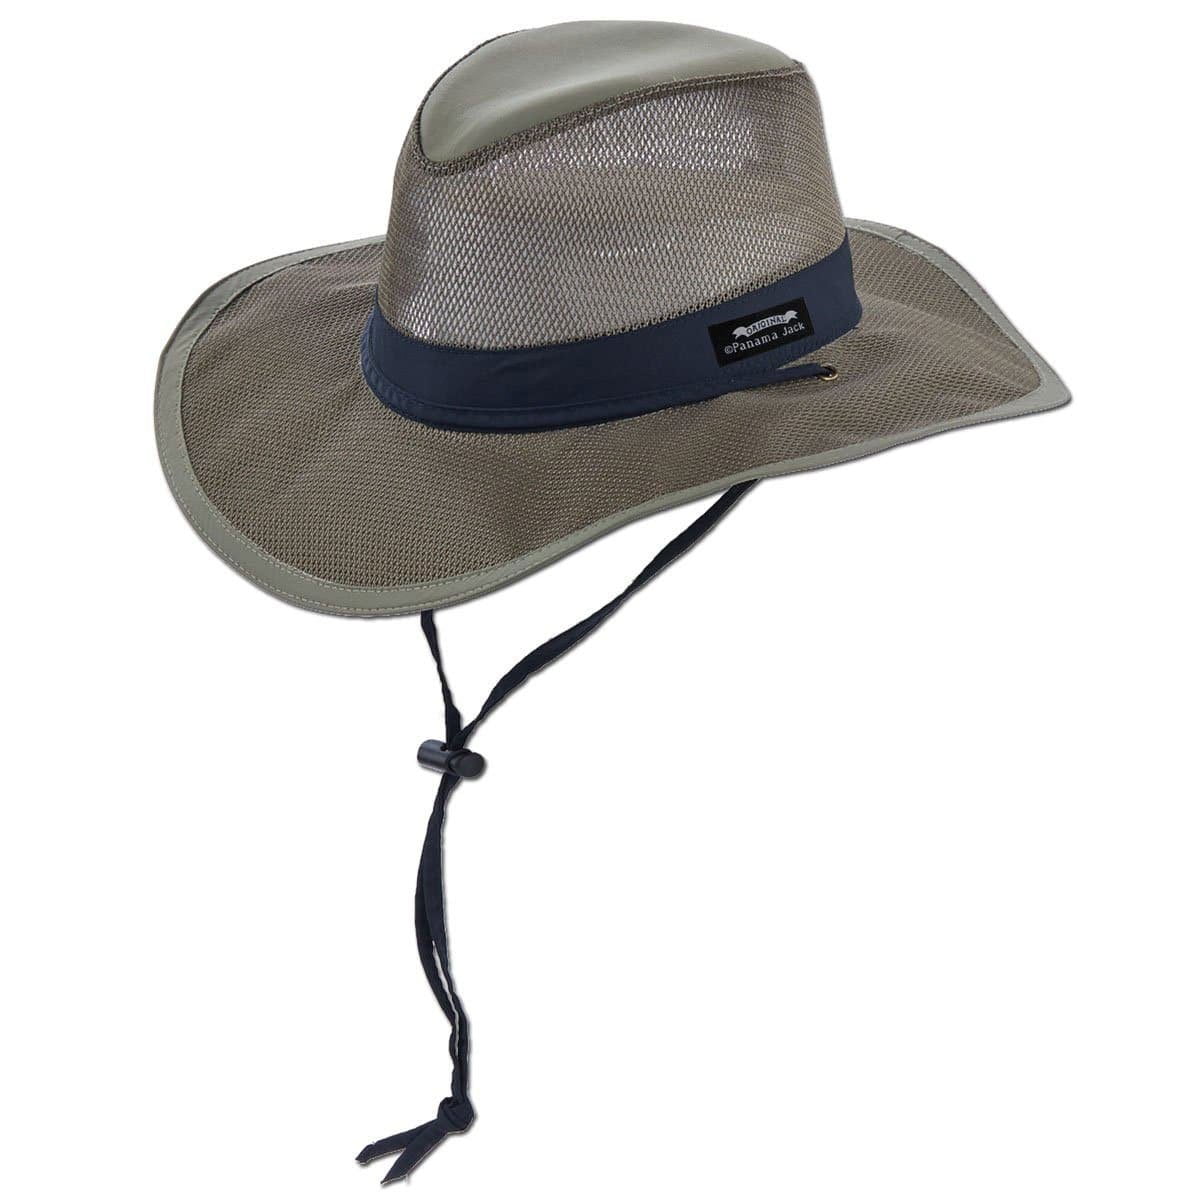 Mesh Oversize Panama Hat Cap Big Head Man Outdoor Fishing Sun Lady